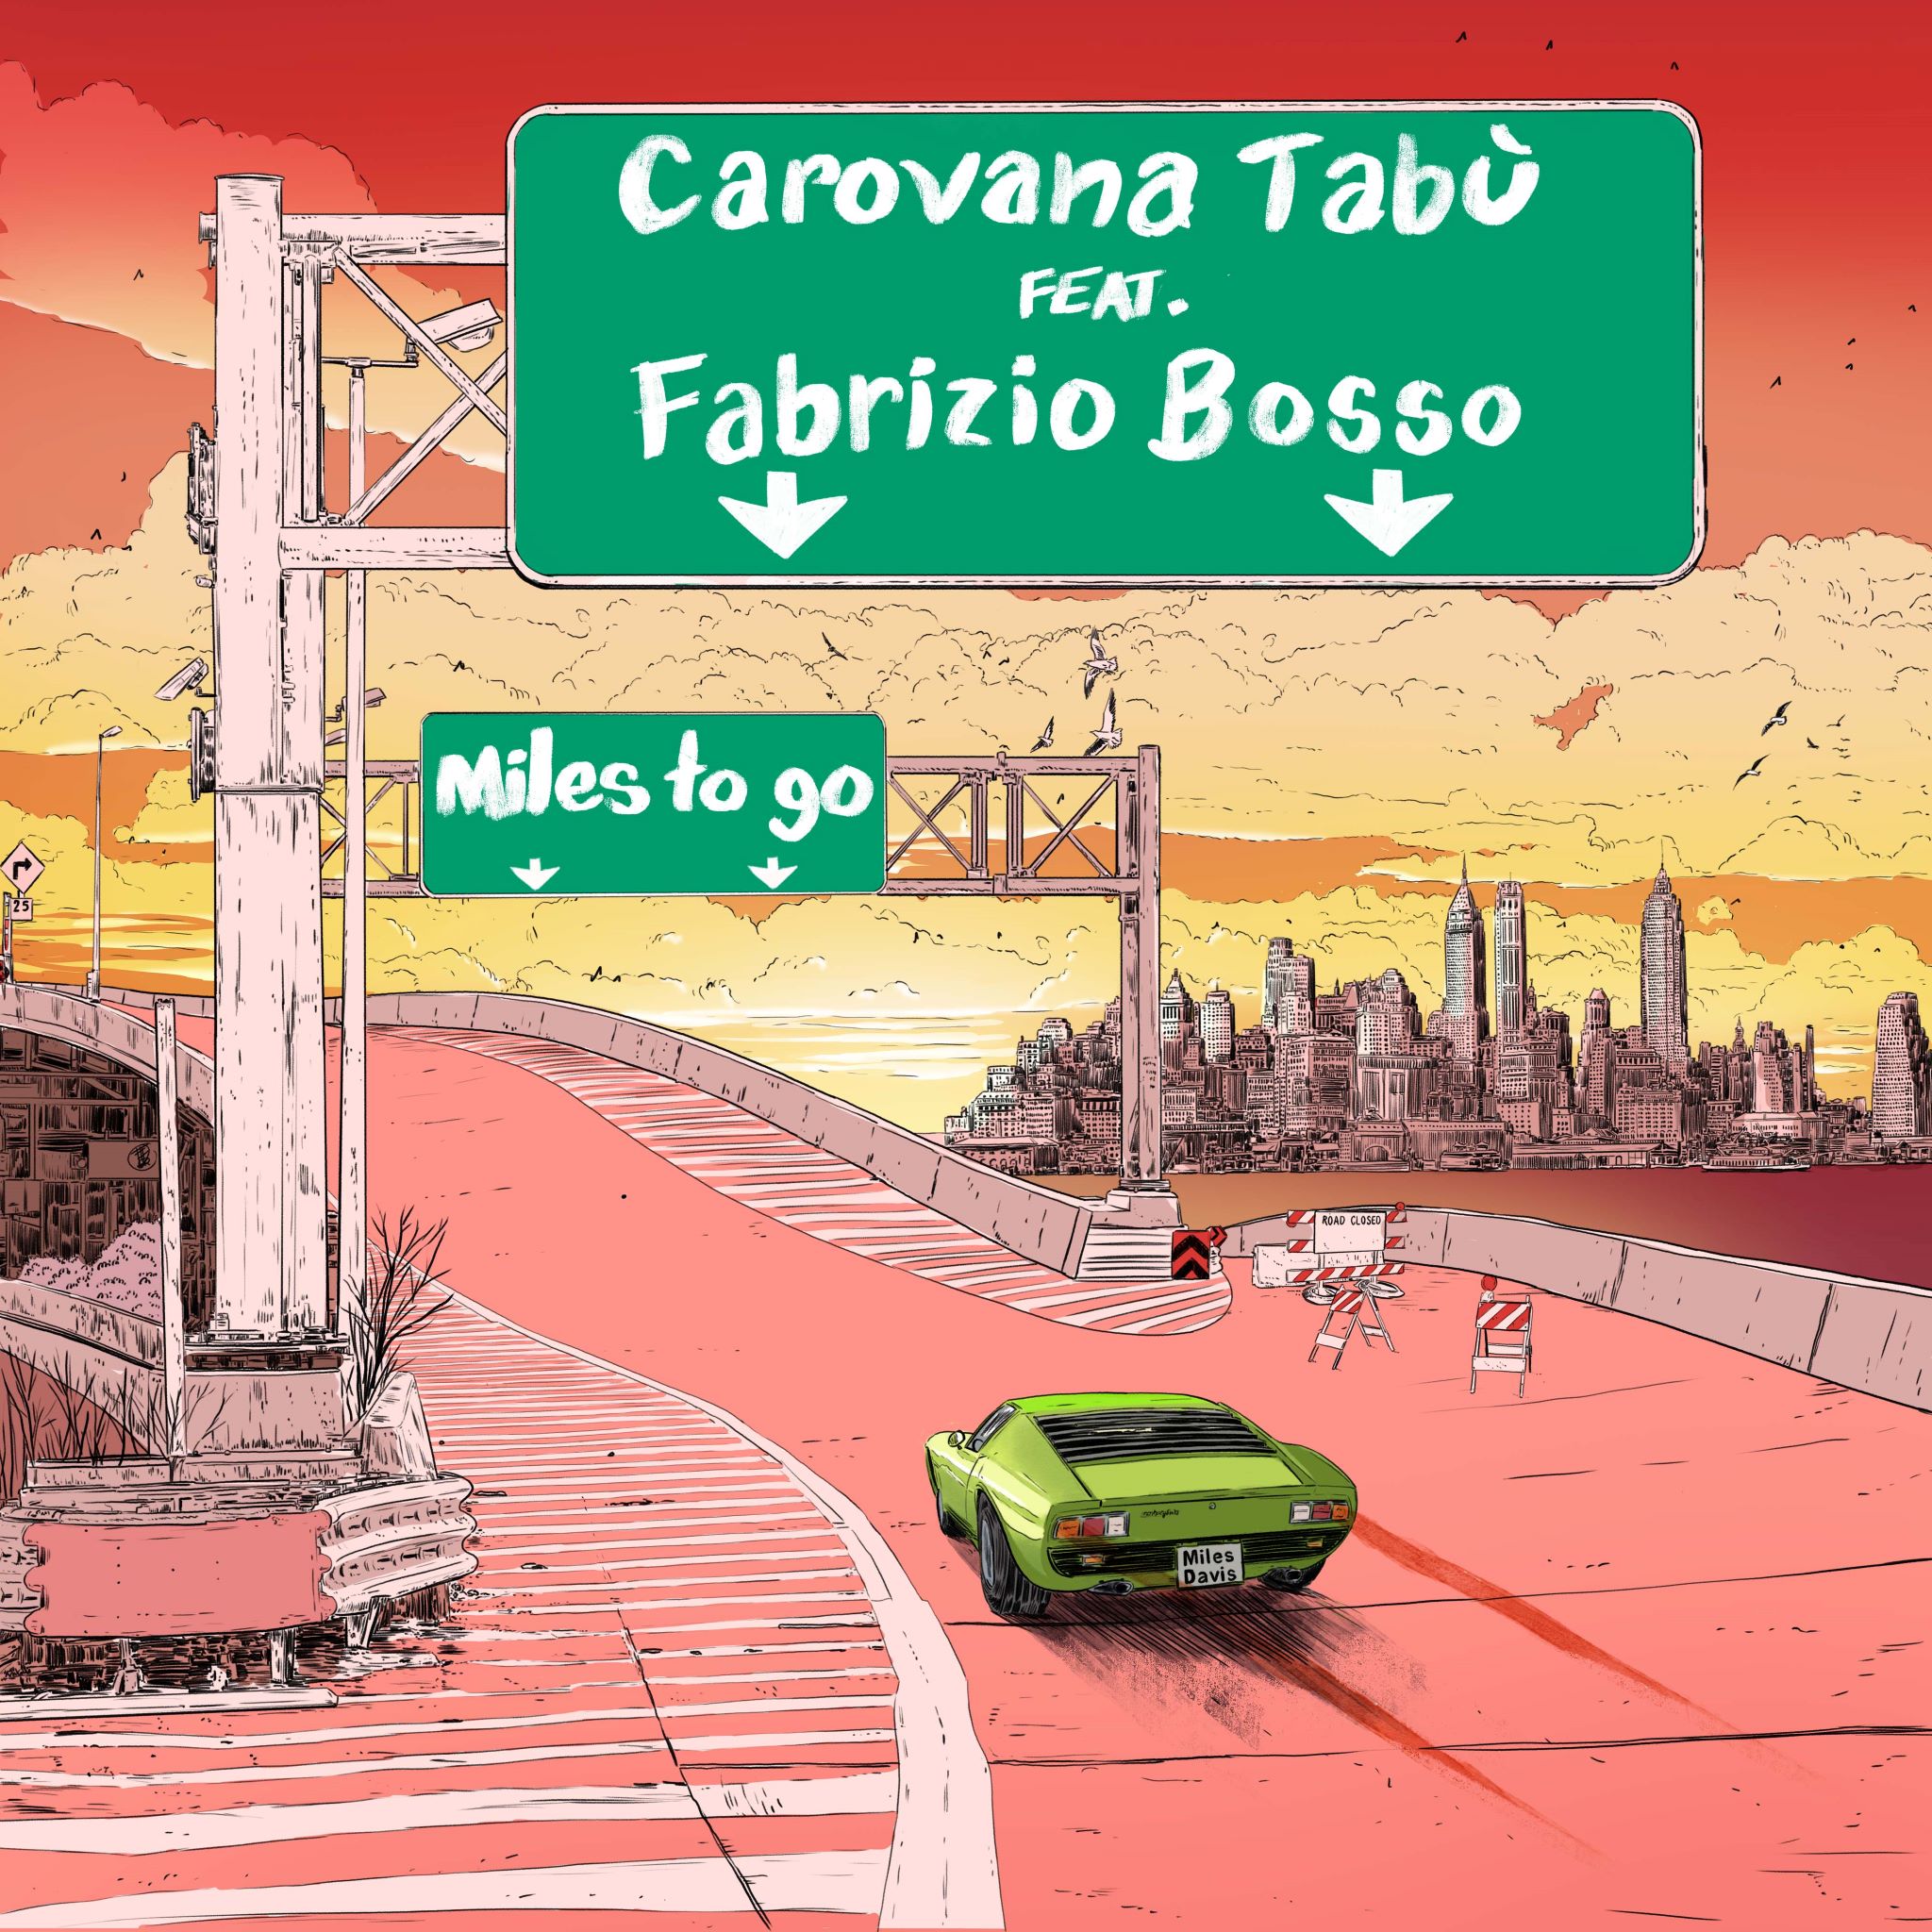 Foto 1 - Carovana Tabù feat. Fabrizio Bosso - “Miles to go” 